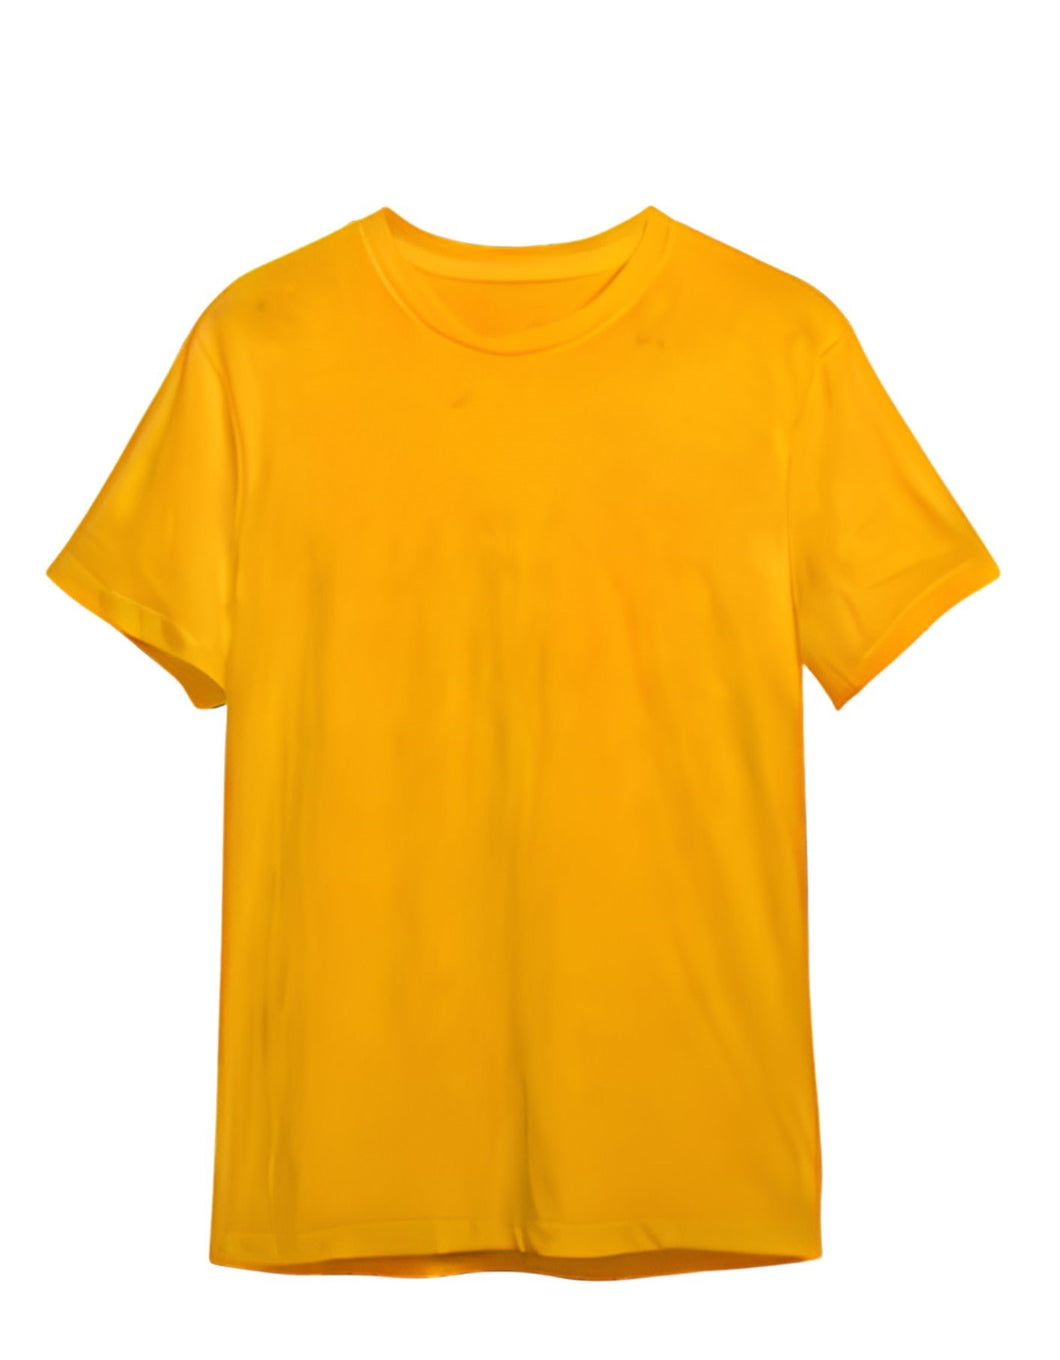 Undeez Basic Yellow Corn T-Shirt